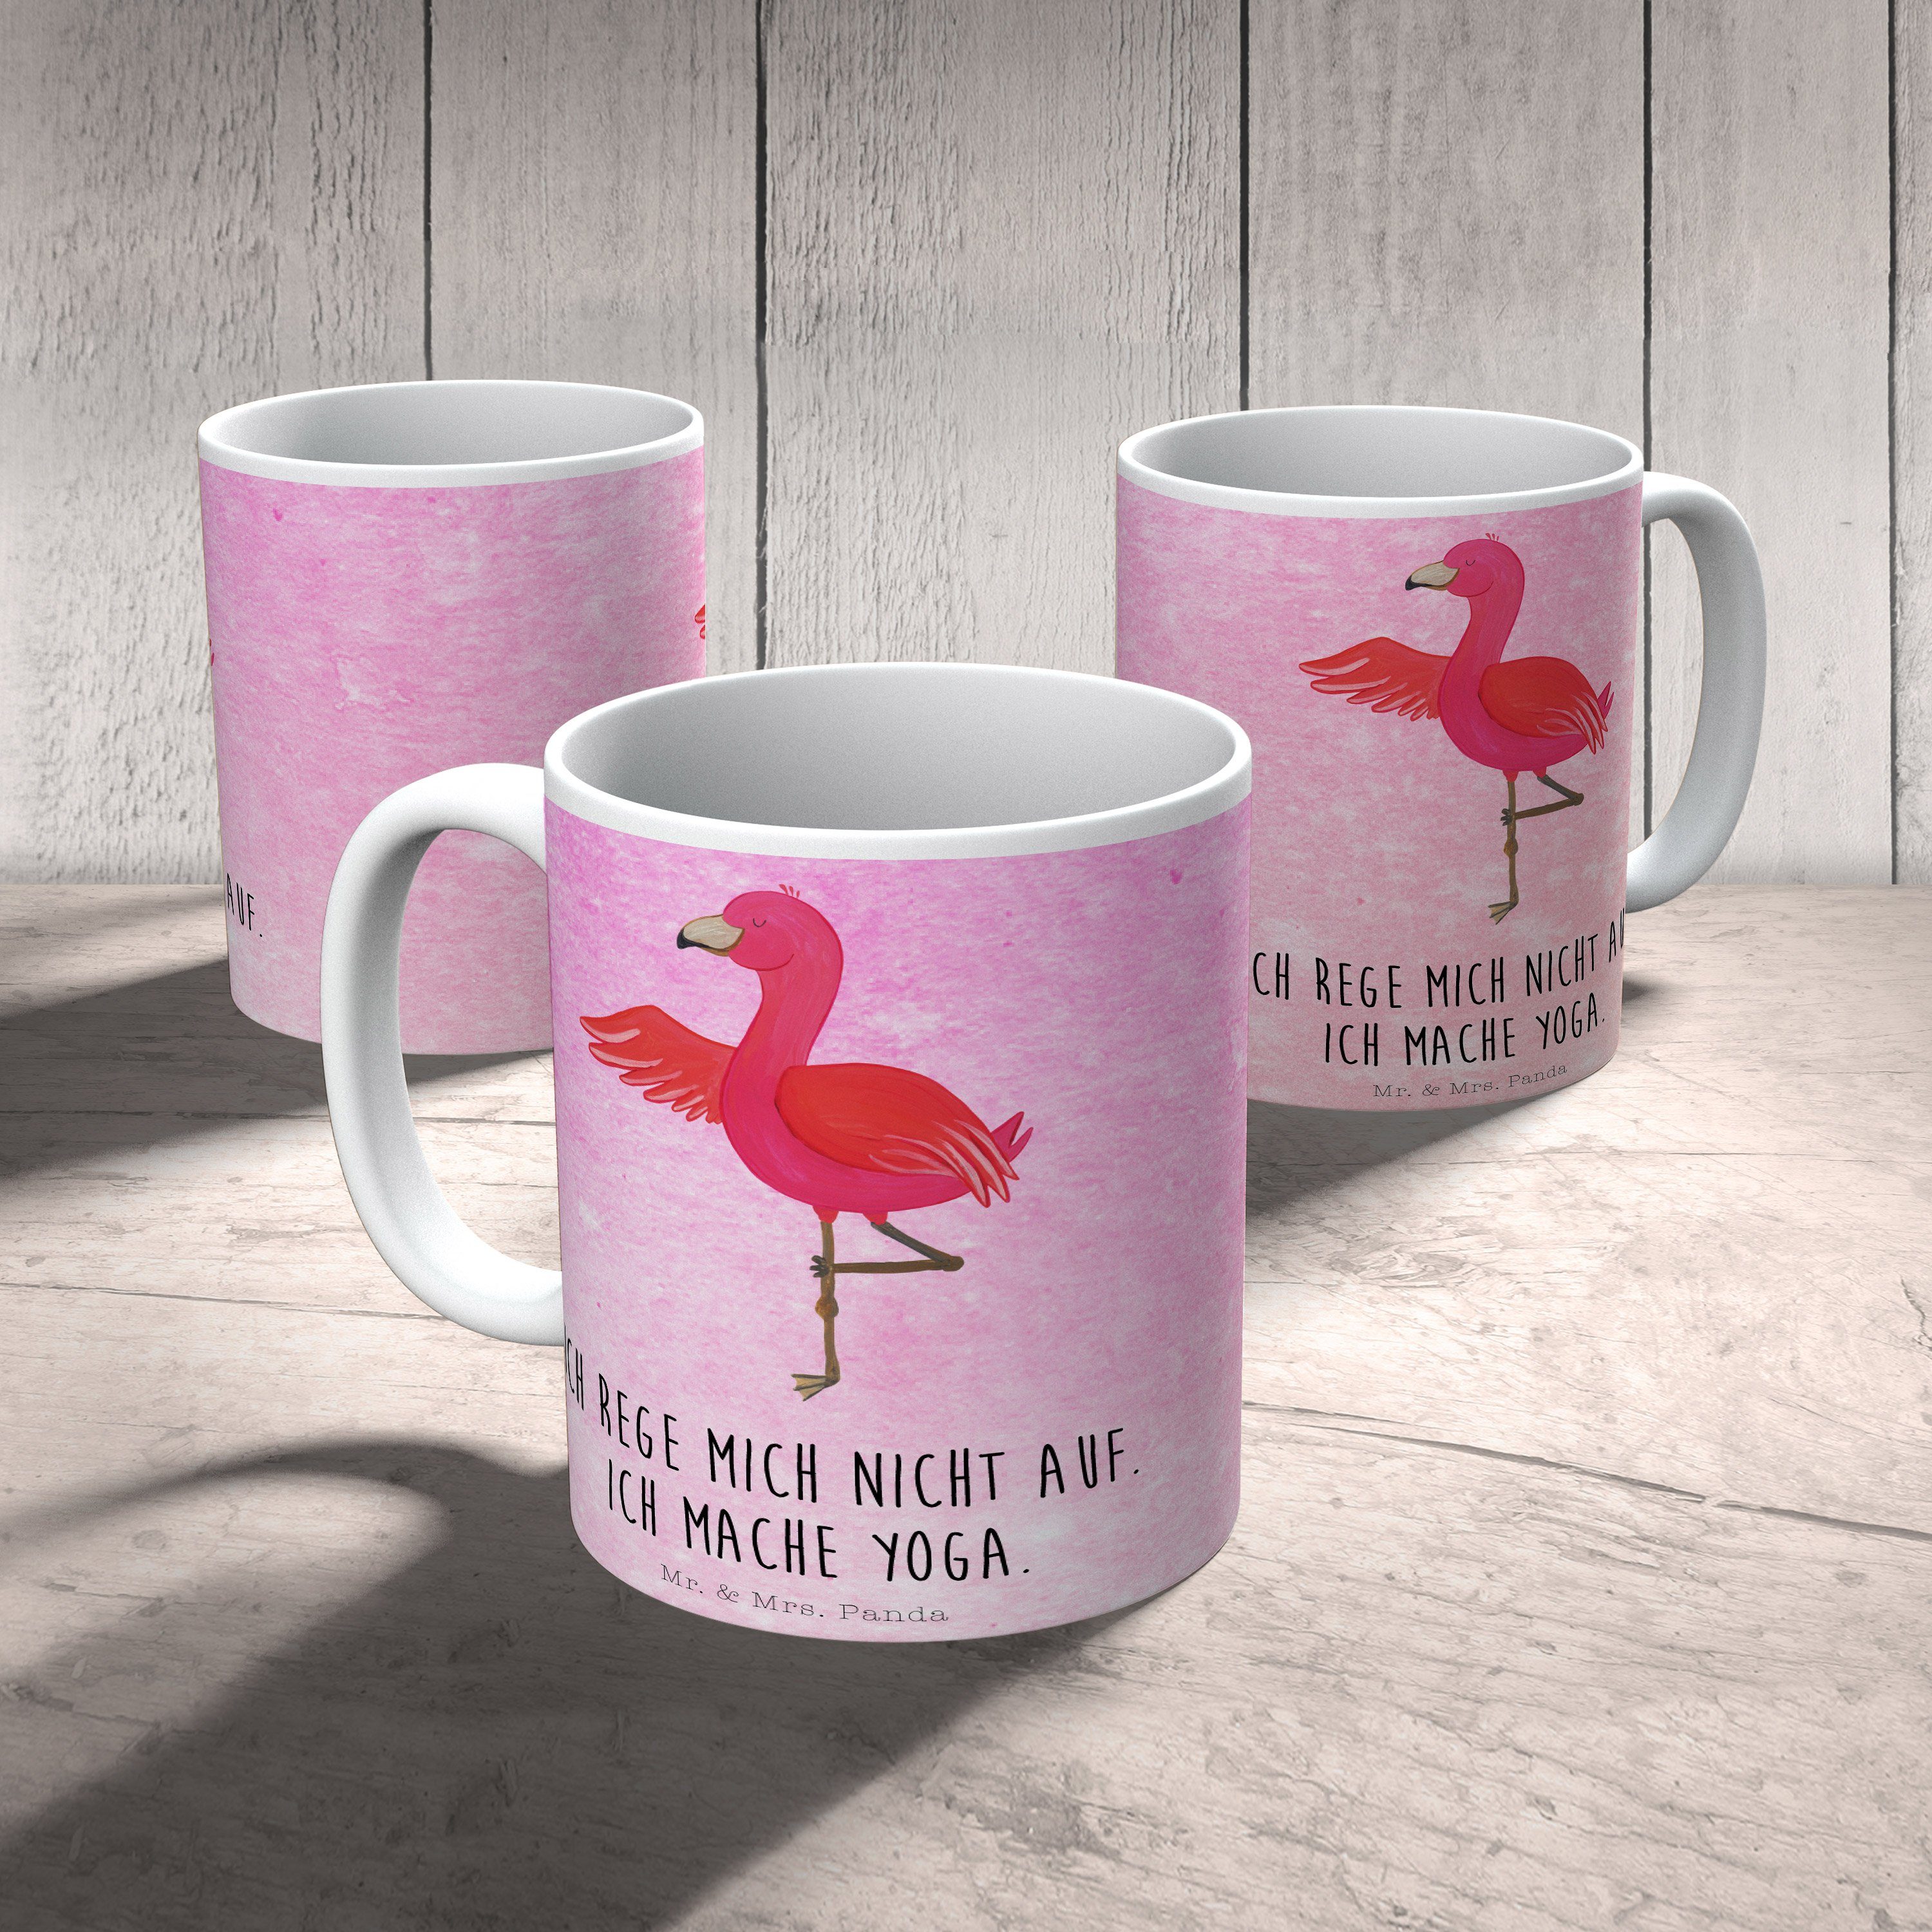 Sprüche, Panda Namaste, Tasse Mrs. & - - Yoga Flamingo Tasse Keramik Pink Geschenk, Aquarell Mr. Ker,